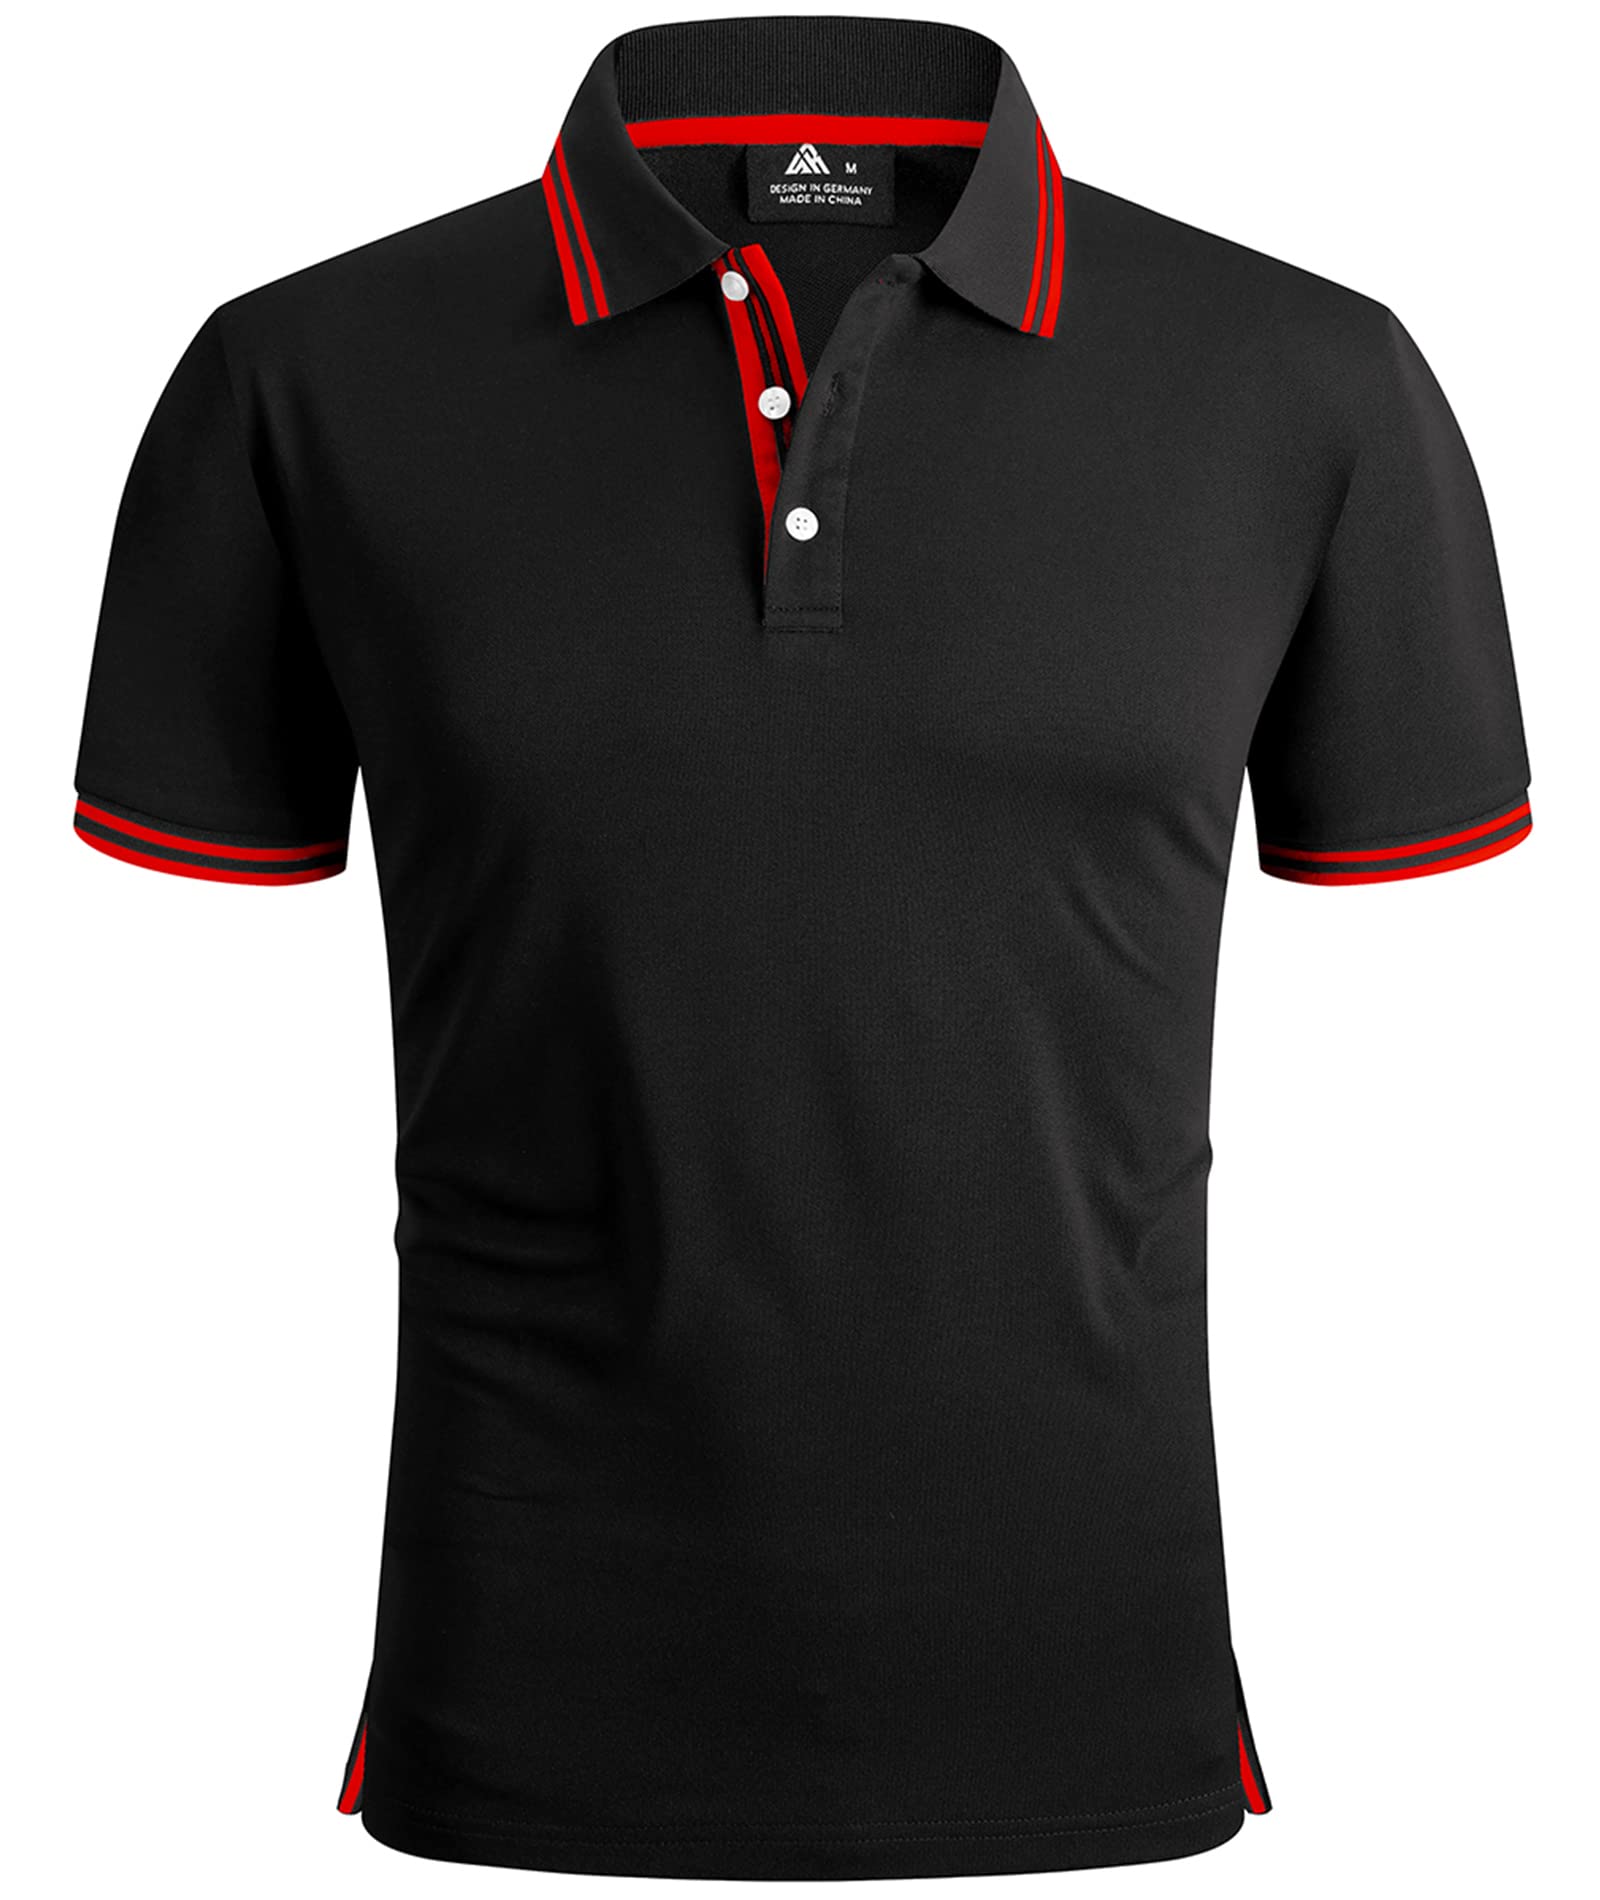 SCODI Mens Polo Shirt Short Sleeve Sports Golf Shirts Athletic Tennis T- Shirt 110-Blackred XL